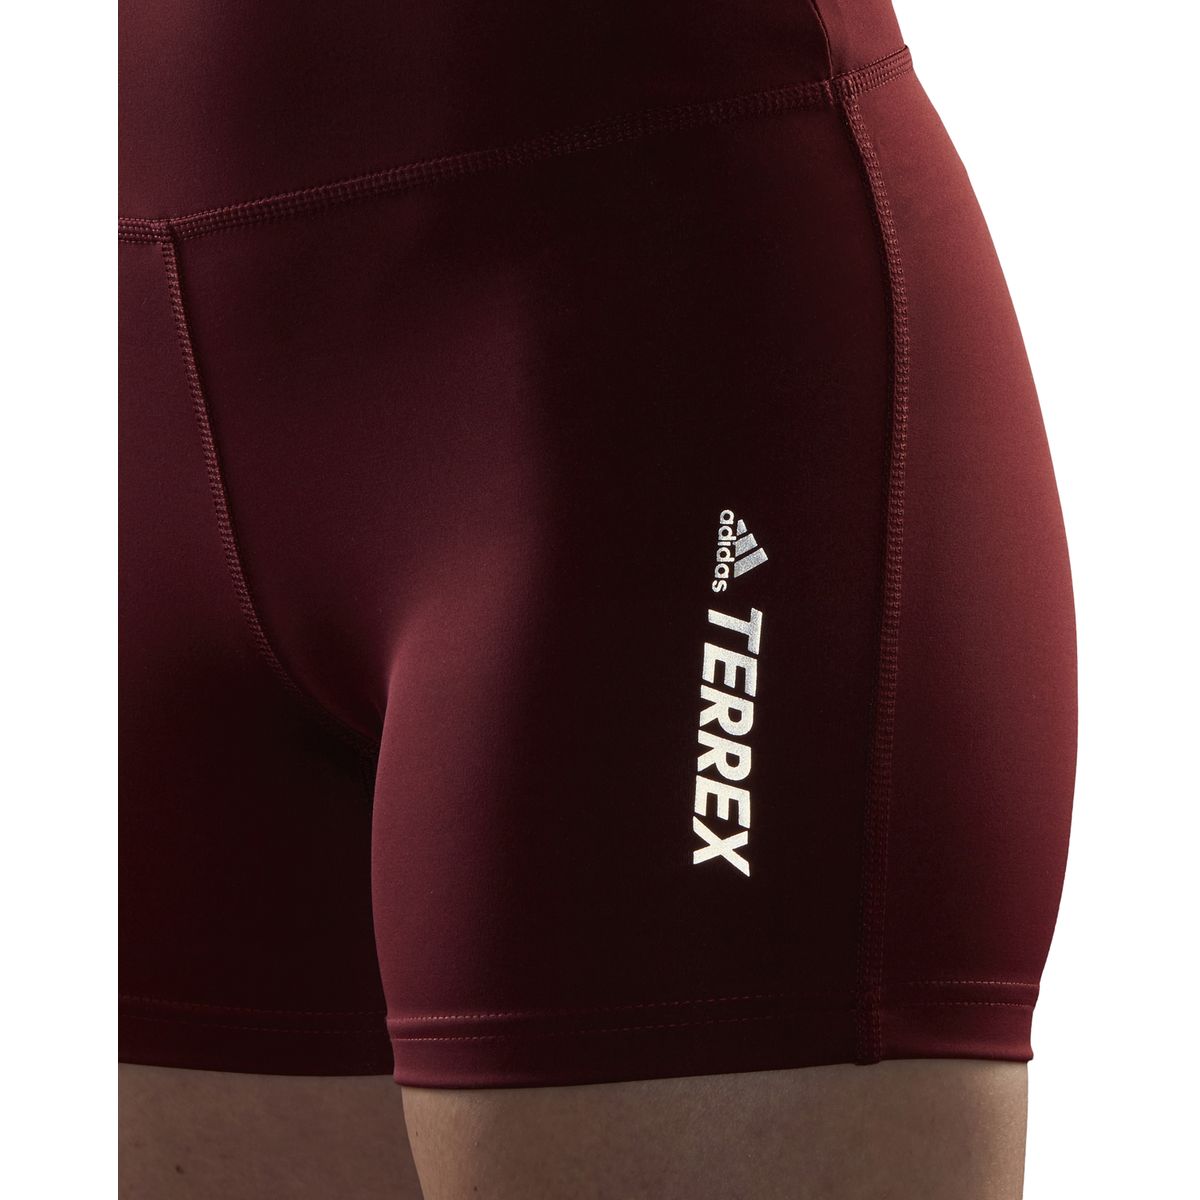 Adidas TERREX Multi Primeblue Shorts Damen_6